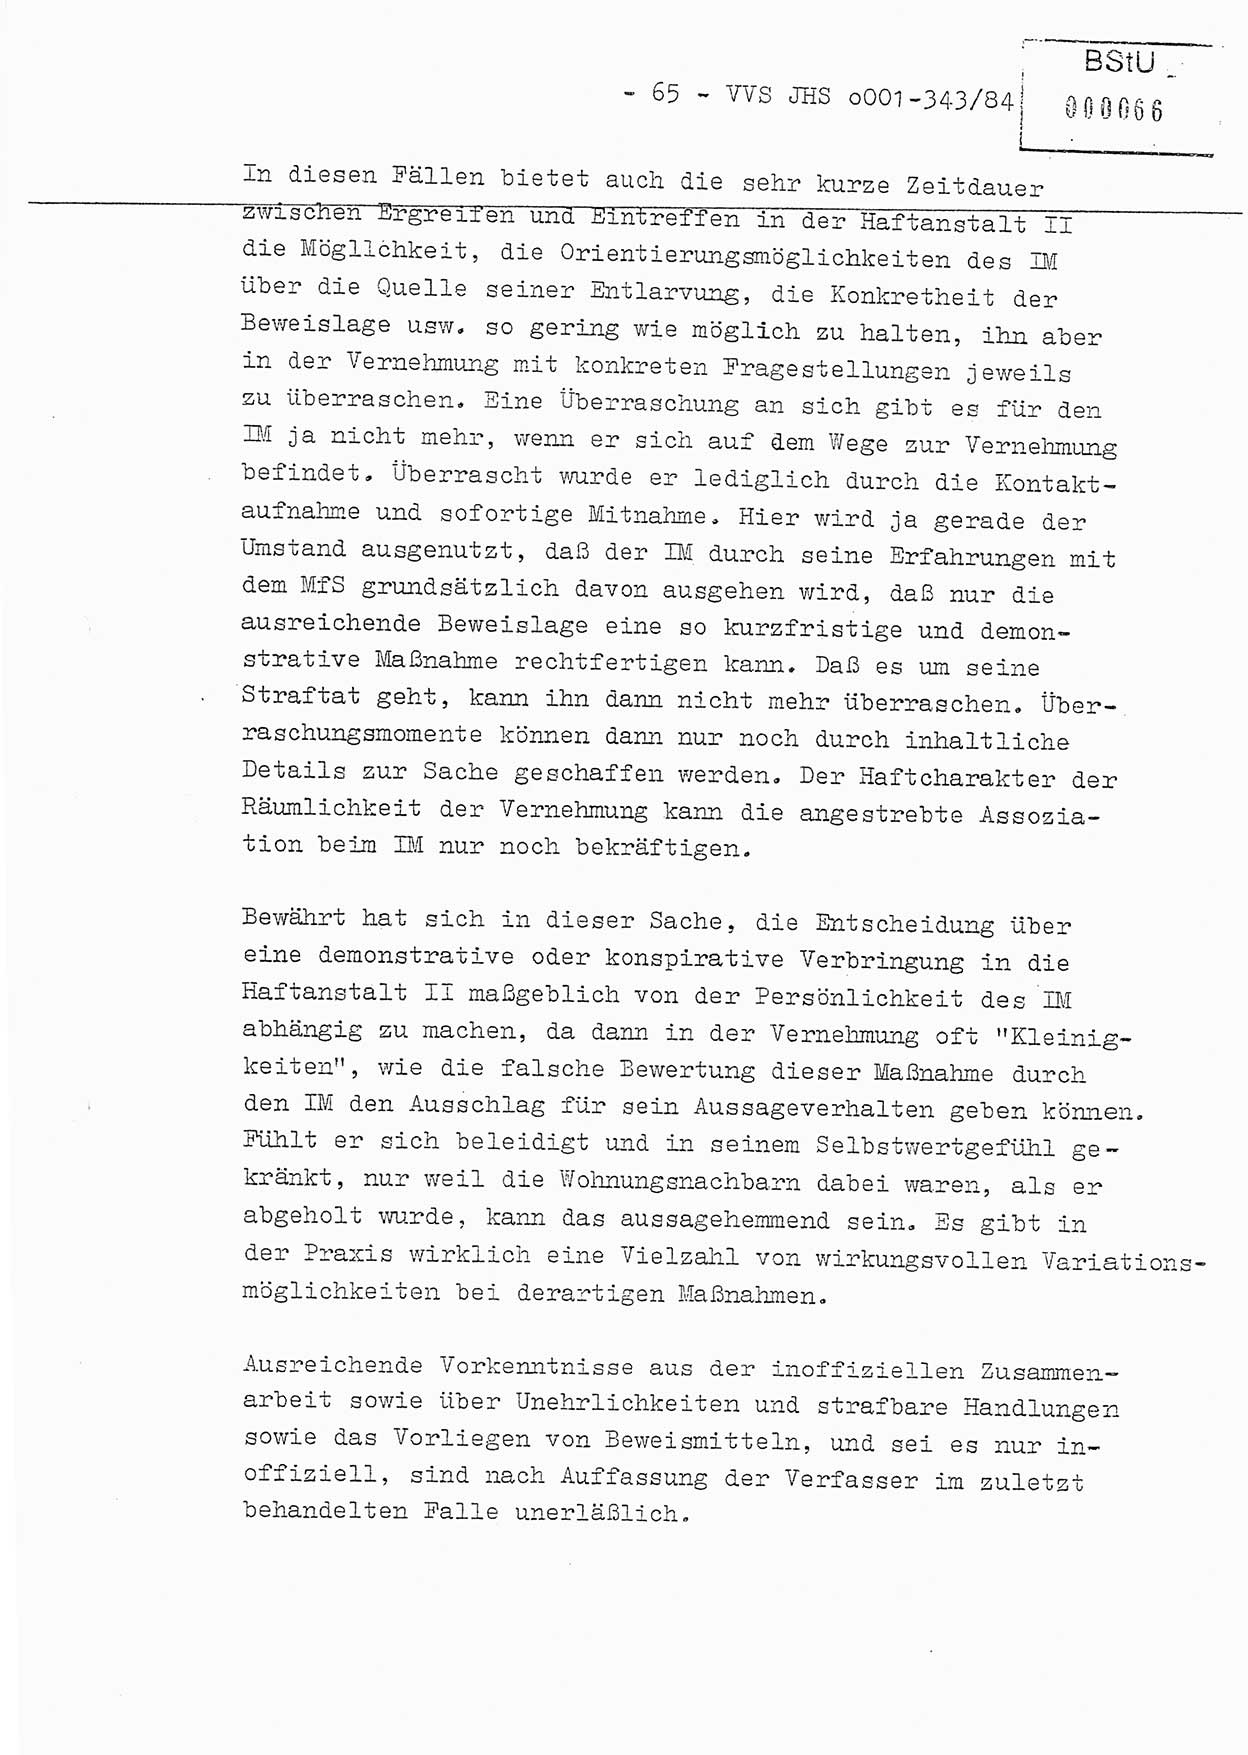 Diplomarbeit, Oberleutnant Bernd Michael (HA Ⅸ/5), Oberleutnant Peter Felber (HA IX/5), Ministerium für Staatssicherheit (MfS) [Deutsche Demokratische Republik (DDR)], Juristische Hochschule (JHS), Vertrauliche Verschlußsache (VVS) o001-343/84, Potsdam 1985, Seite 65 (Dipl.-Arb. MfS DDR JHS VVS o001-343/84 1985, S. 65)